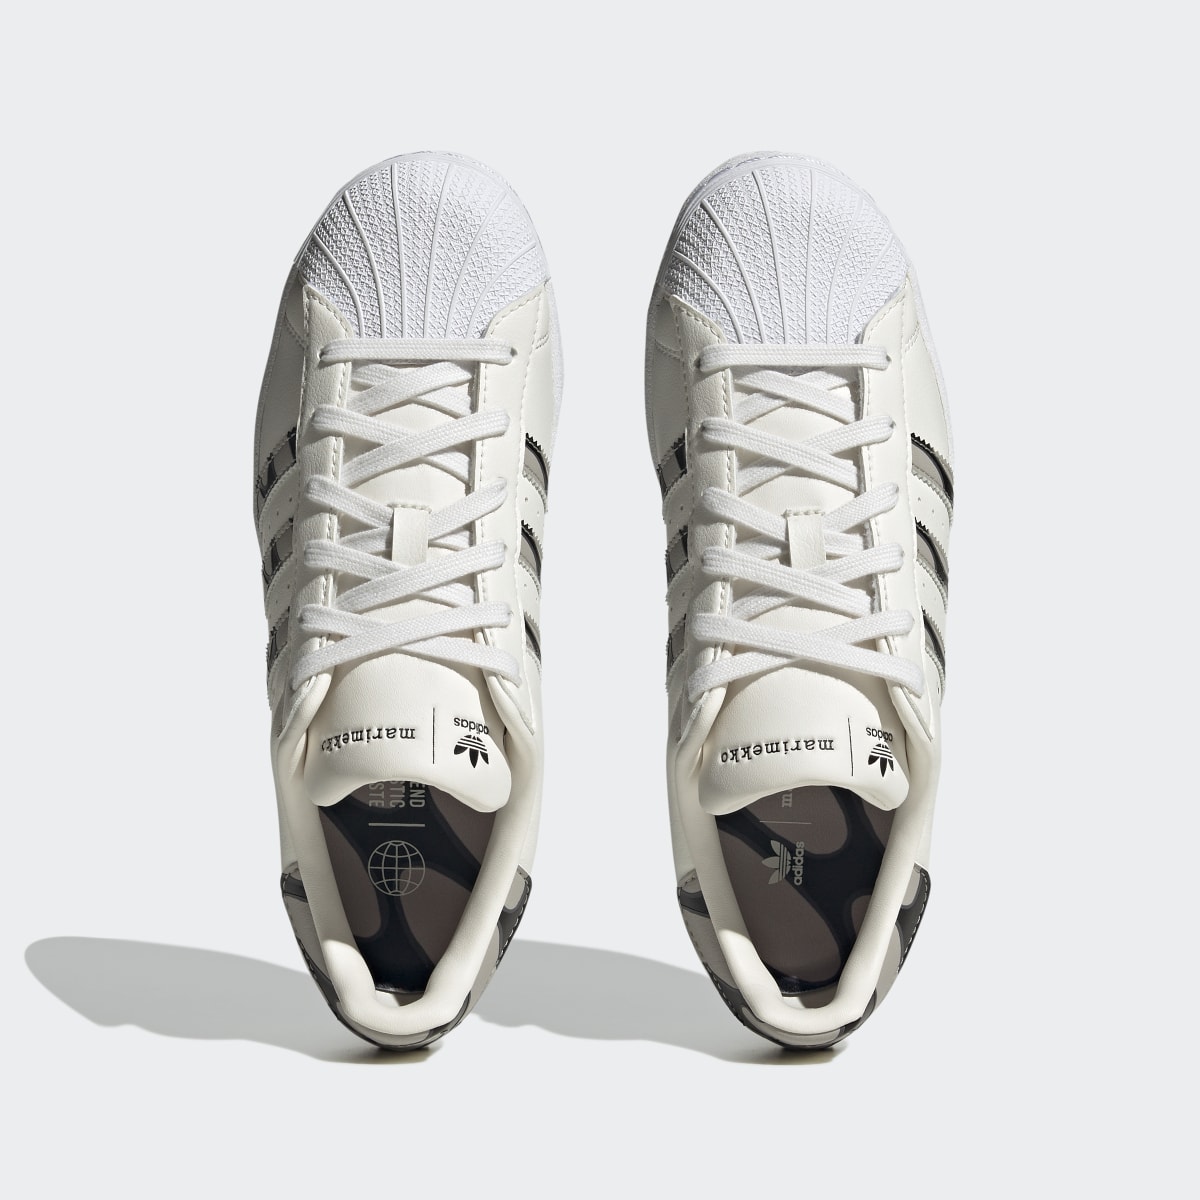 Adidas Scarpe adidas x Marimekko Superstar. 4